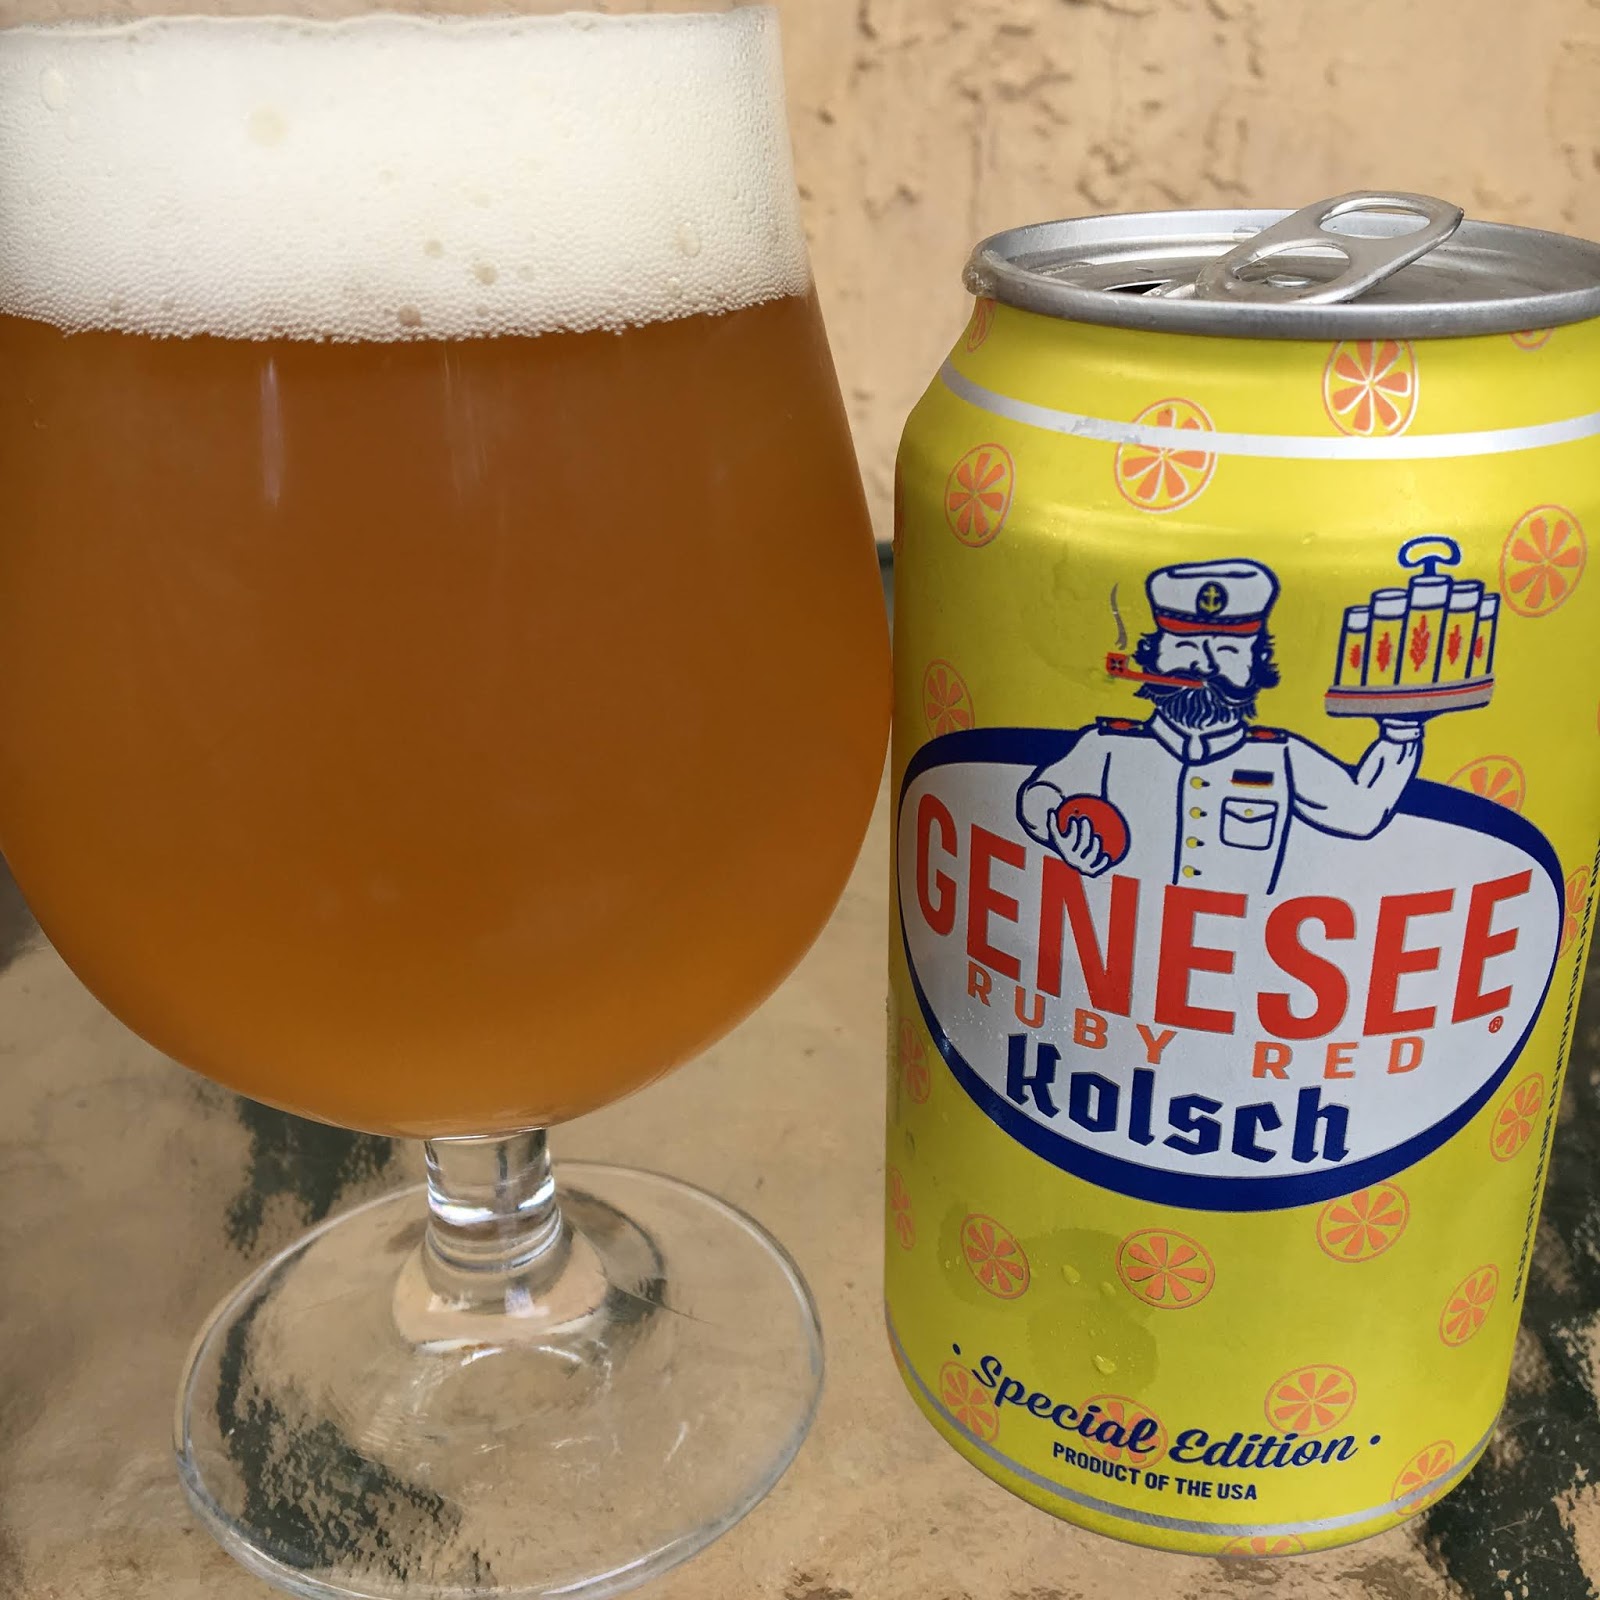 daily-beer-review-genesee-ruby-red-kolsch